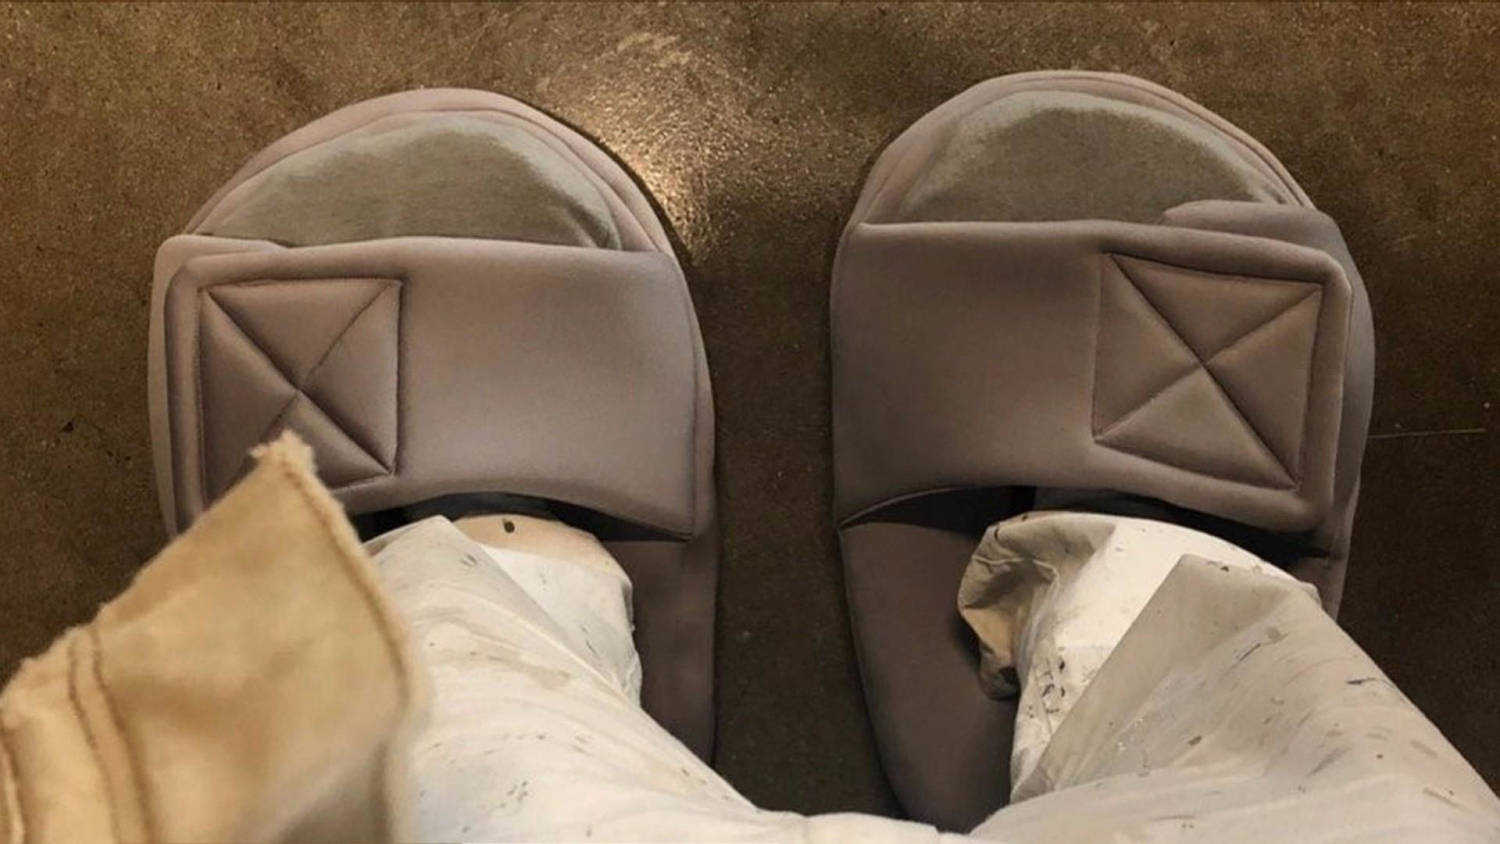 Kanye West dons huge shoes after social media ridicule